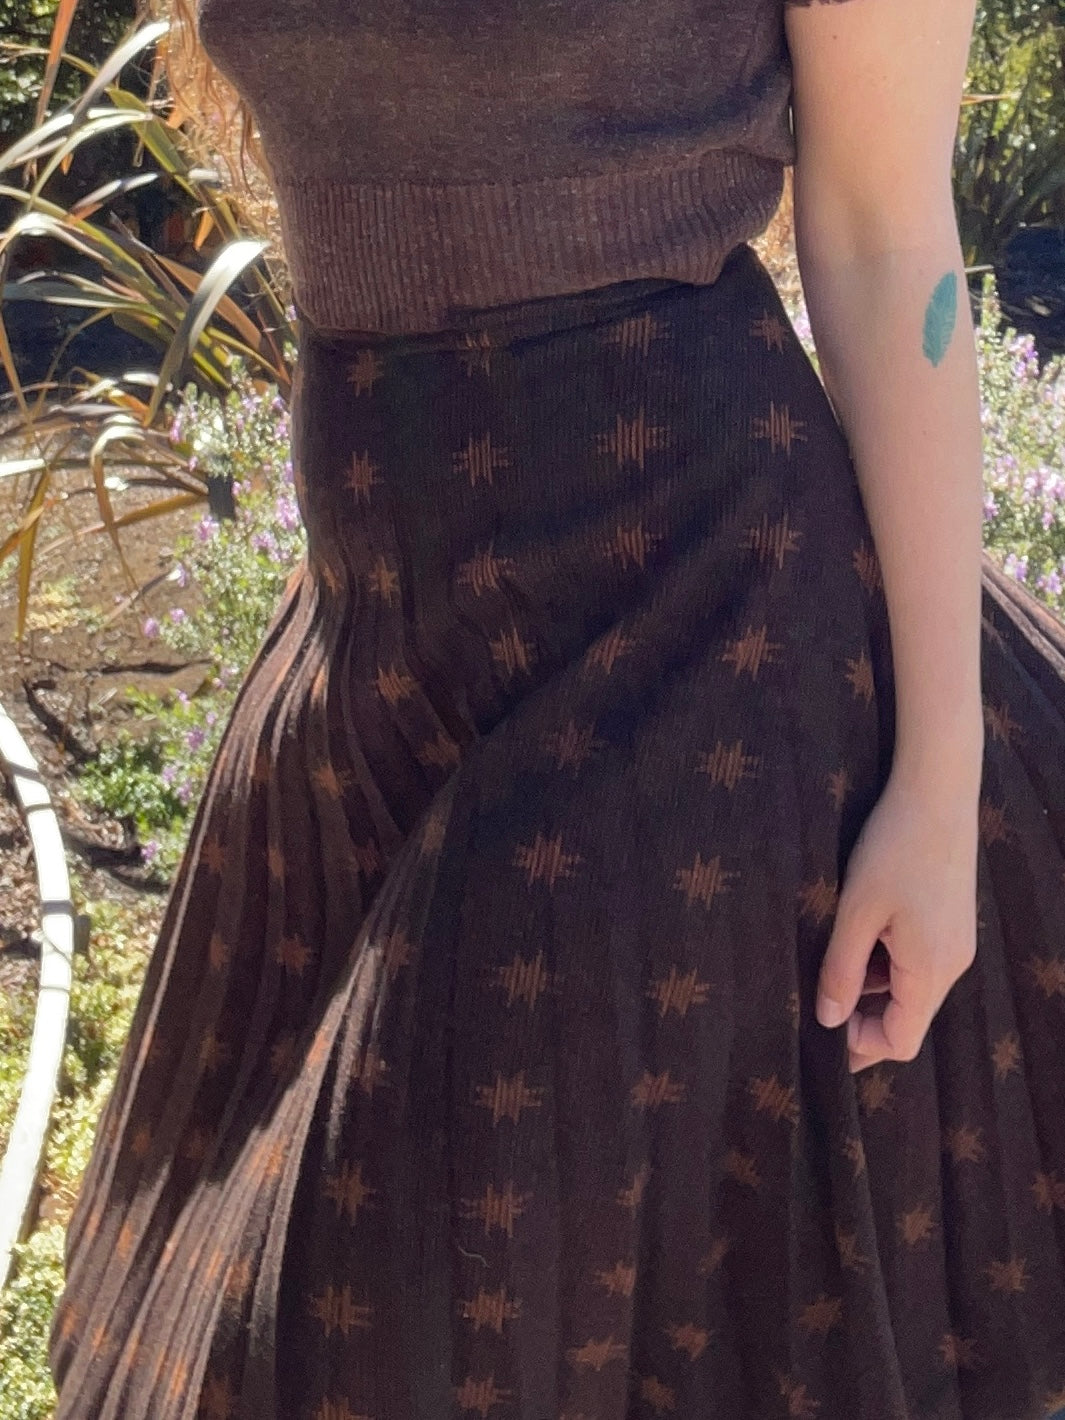 1940s Knit Wool Starburst Skirt